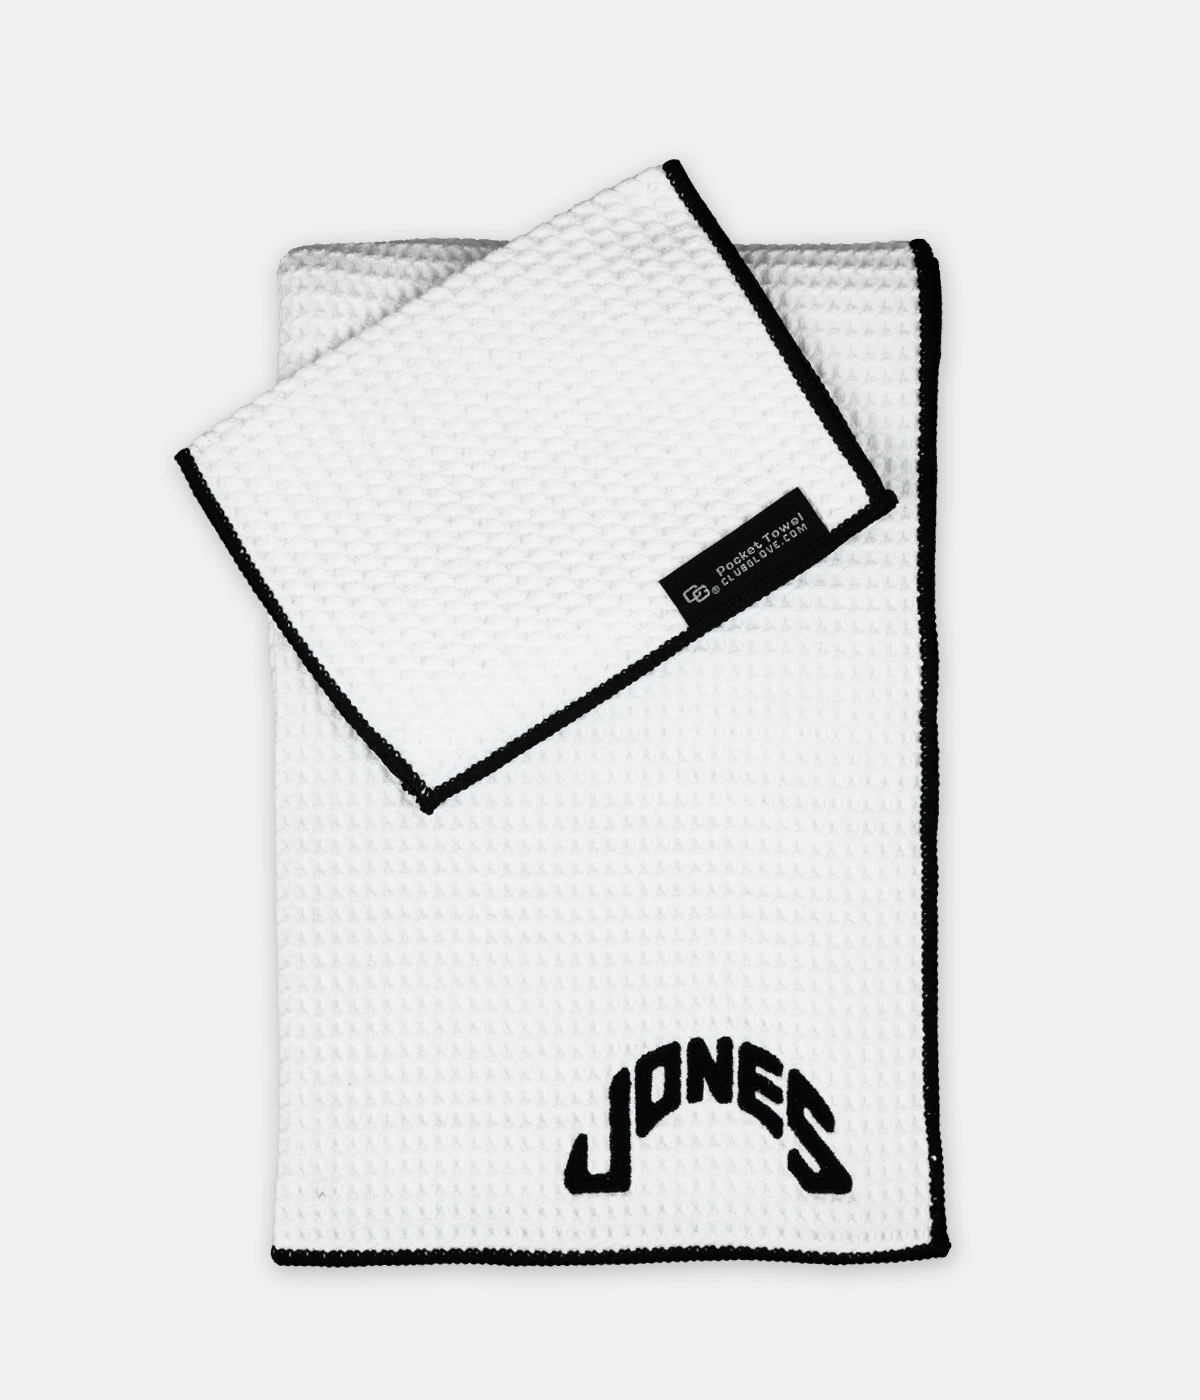 Jones Sports Co. Tour Towel White/Black